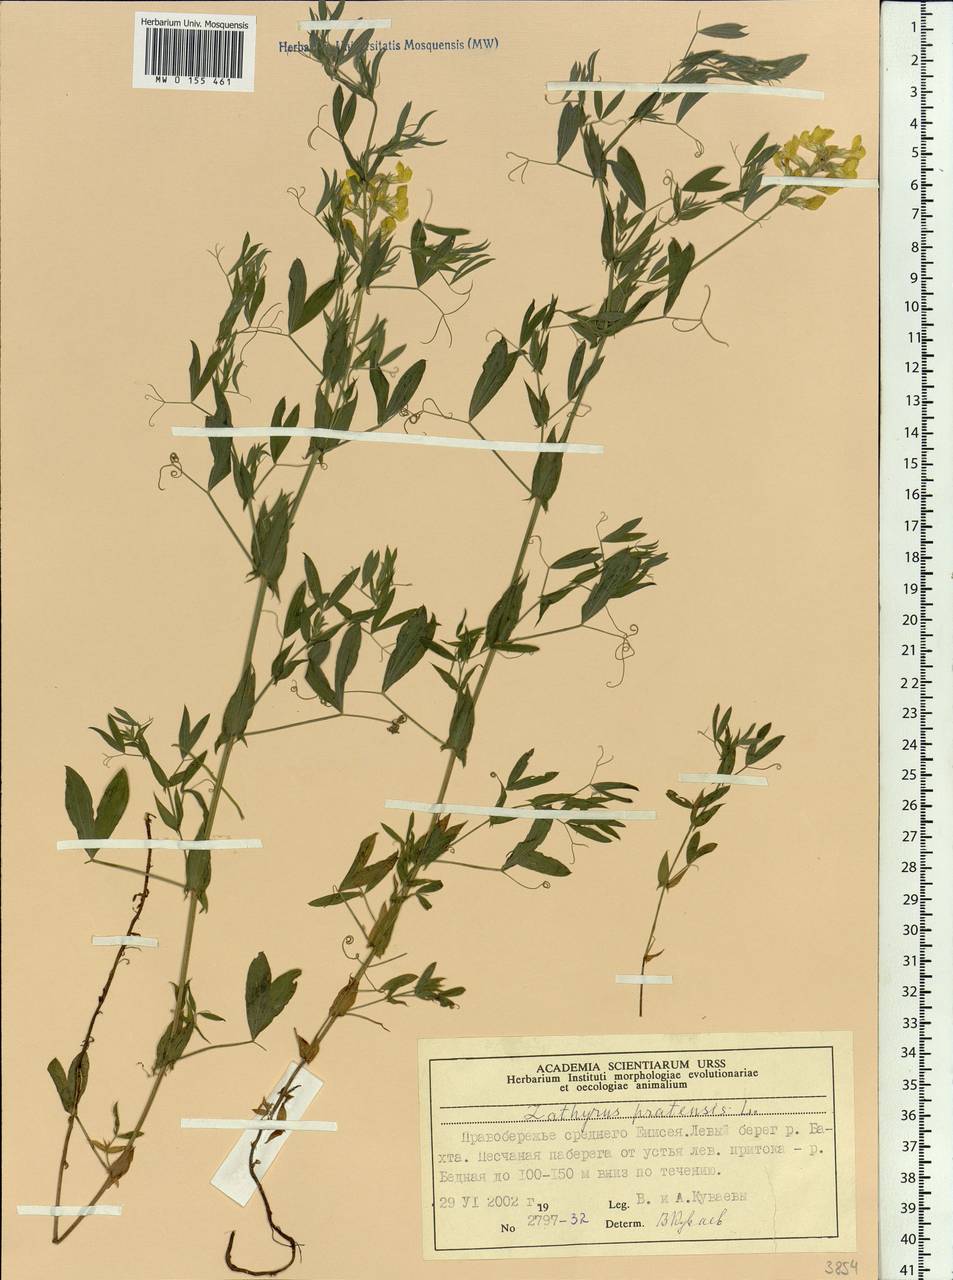 Lathyrus pratensis L., Siberia, Central Siberia (S3) (Russia)